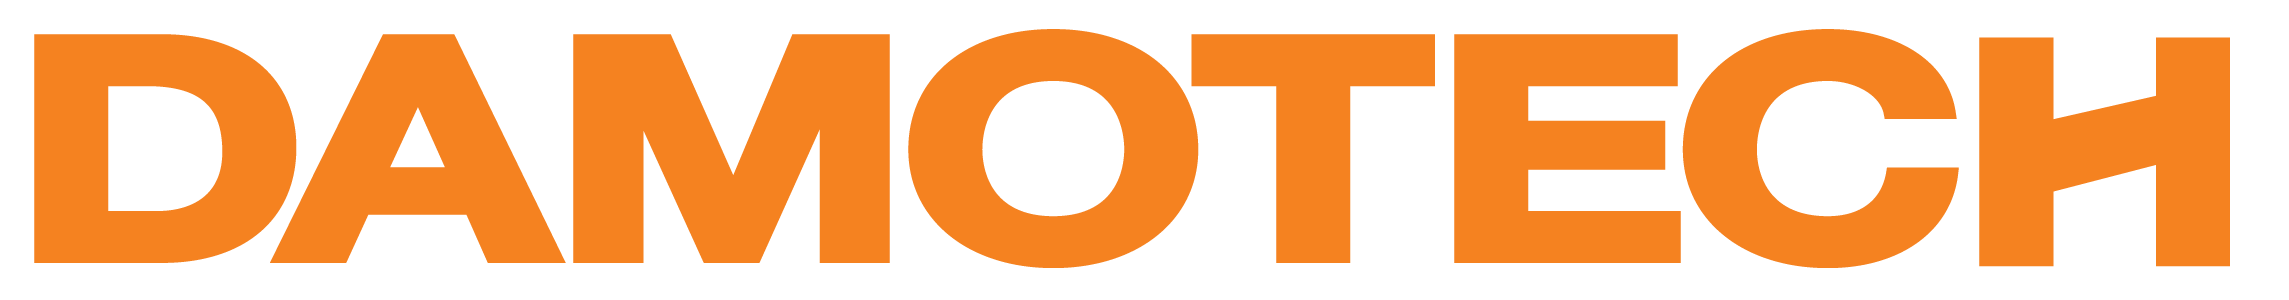 Damotech Logo